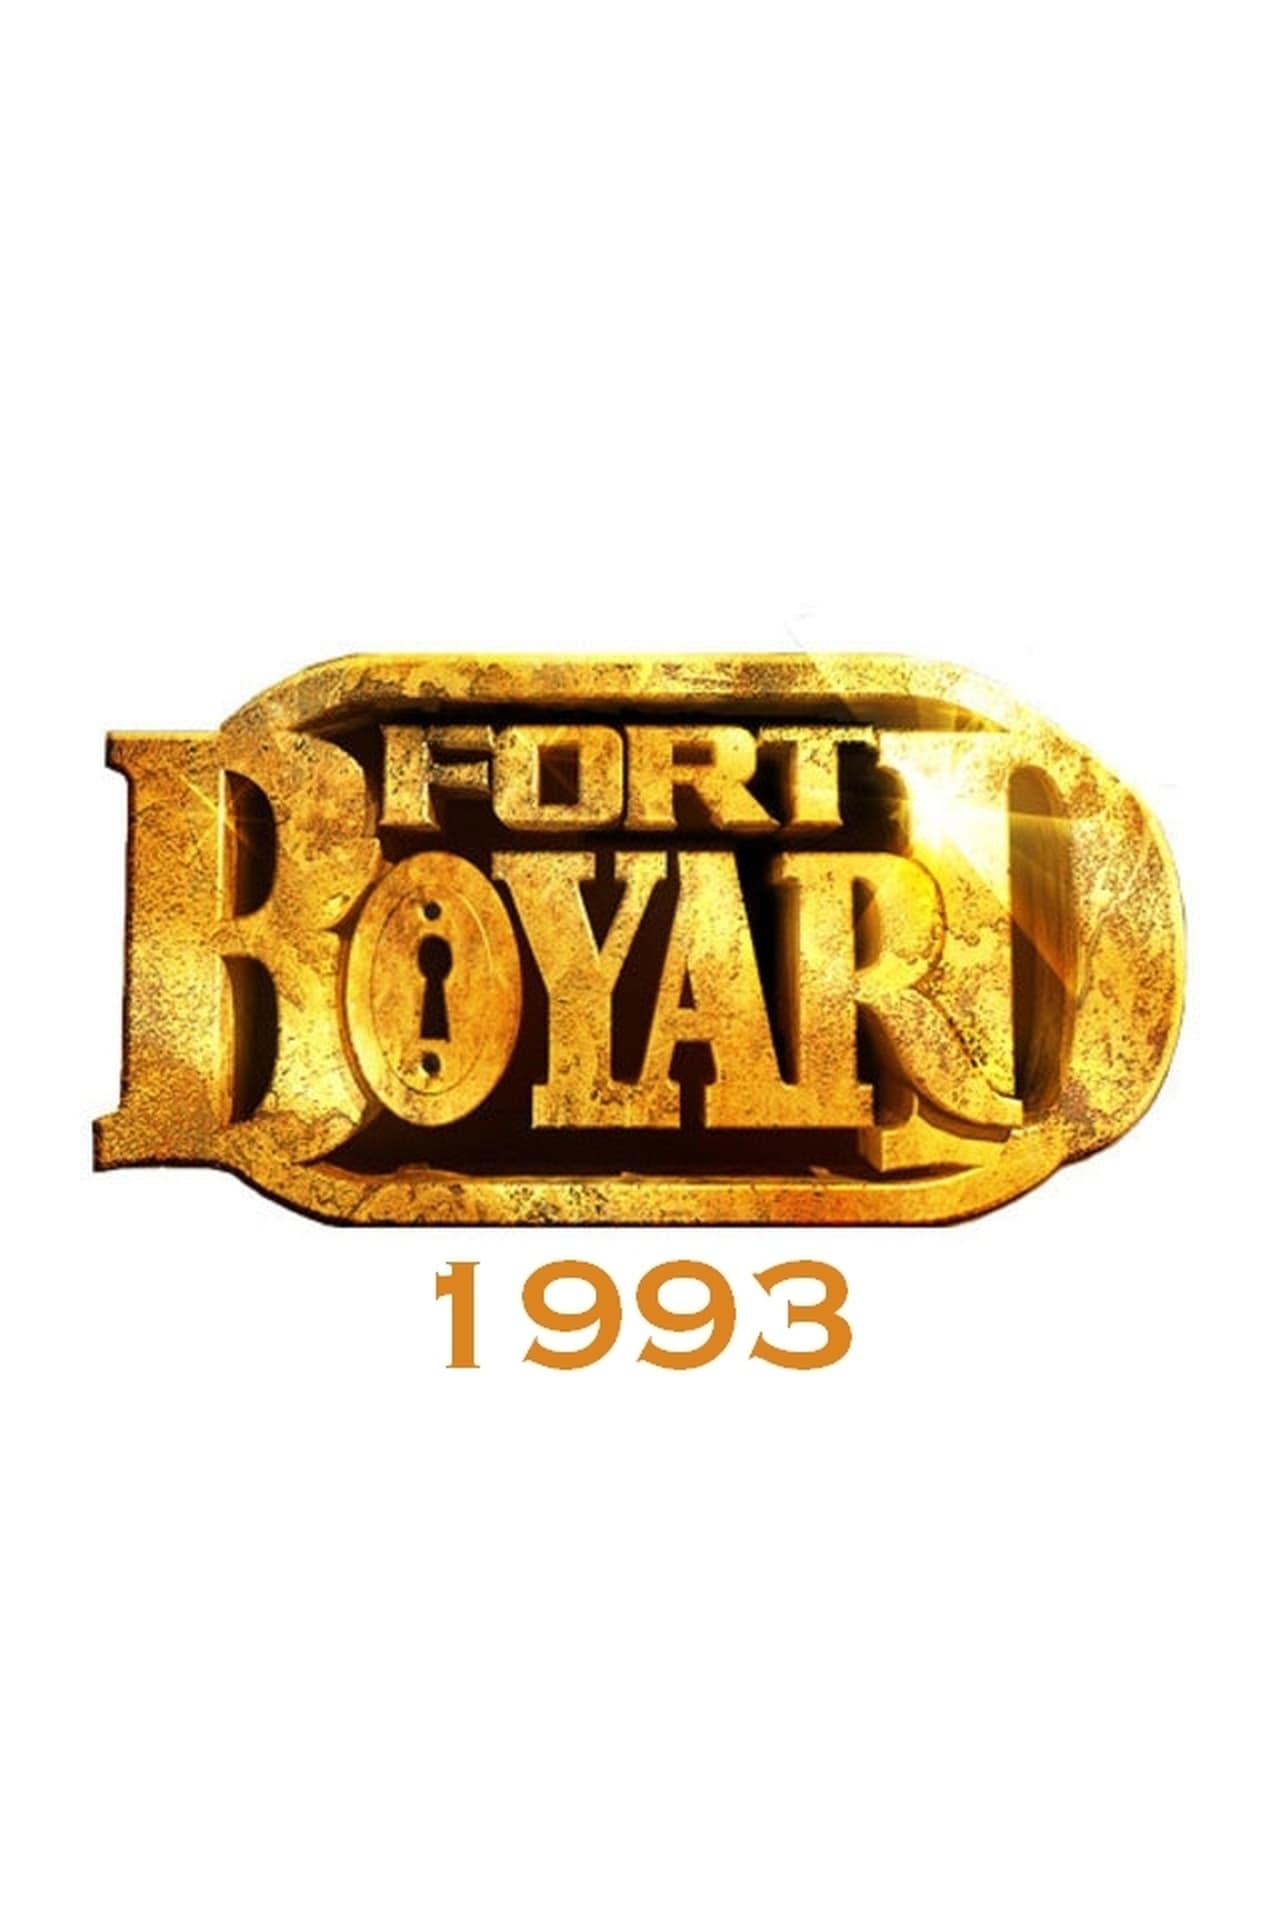 Fort Boyard (1993)